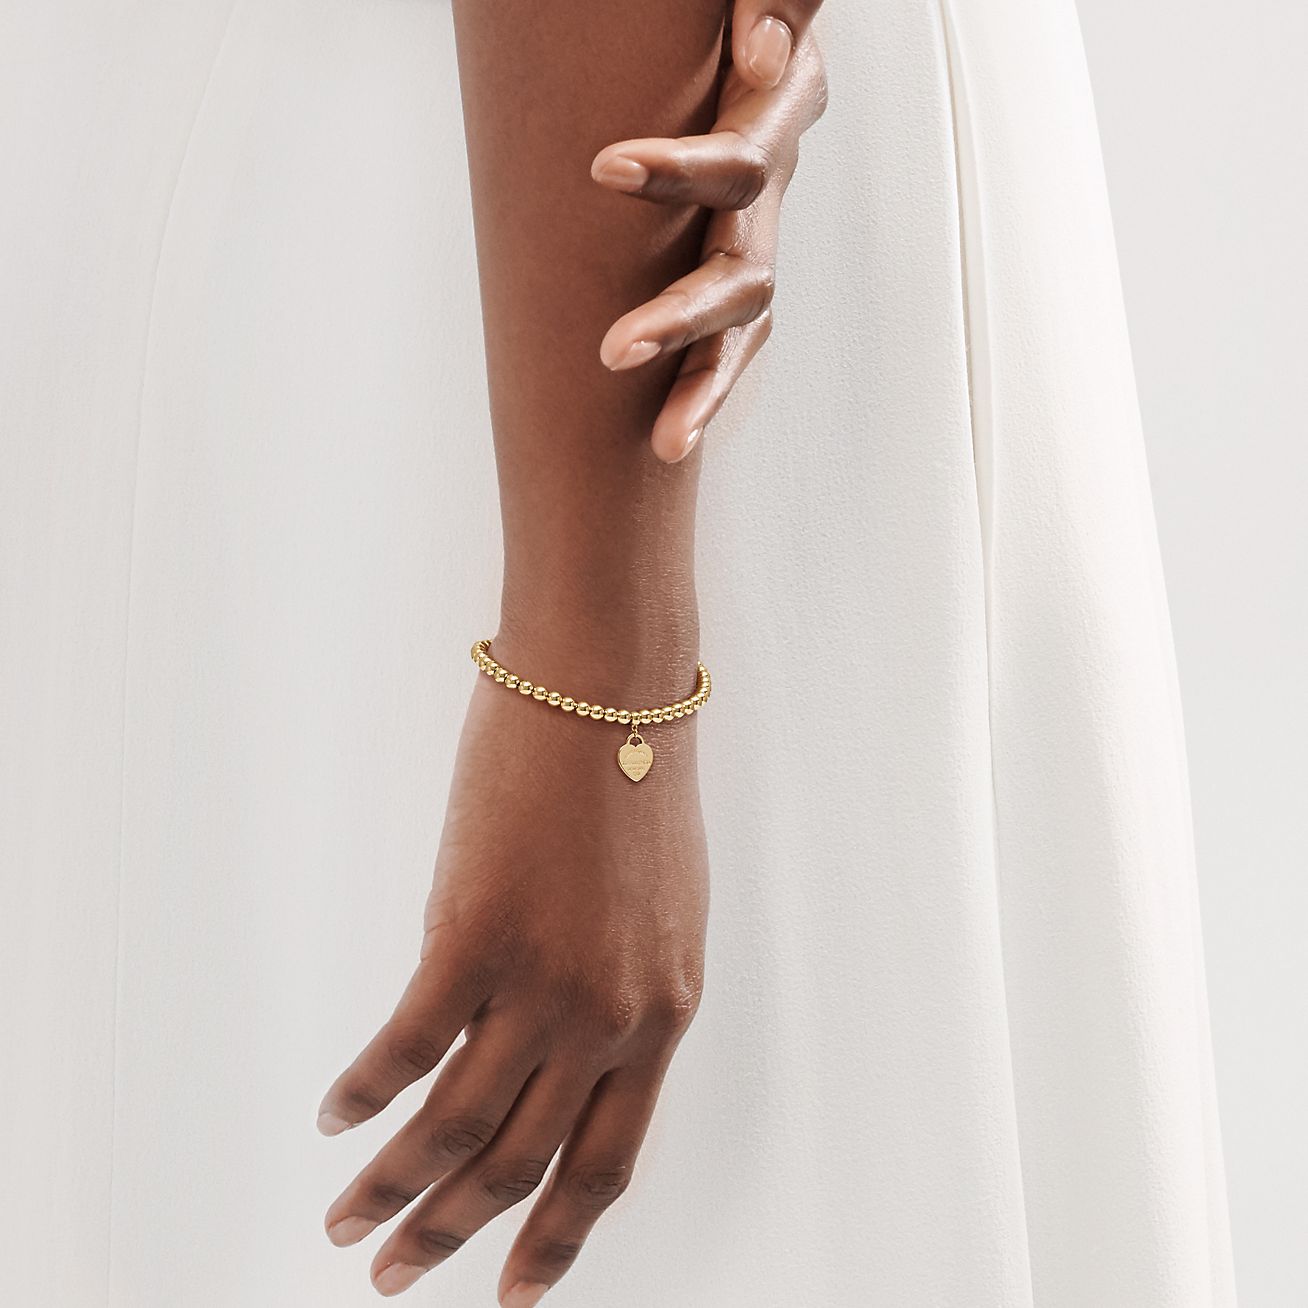 tiffany bead bracelet rose gold heart